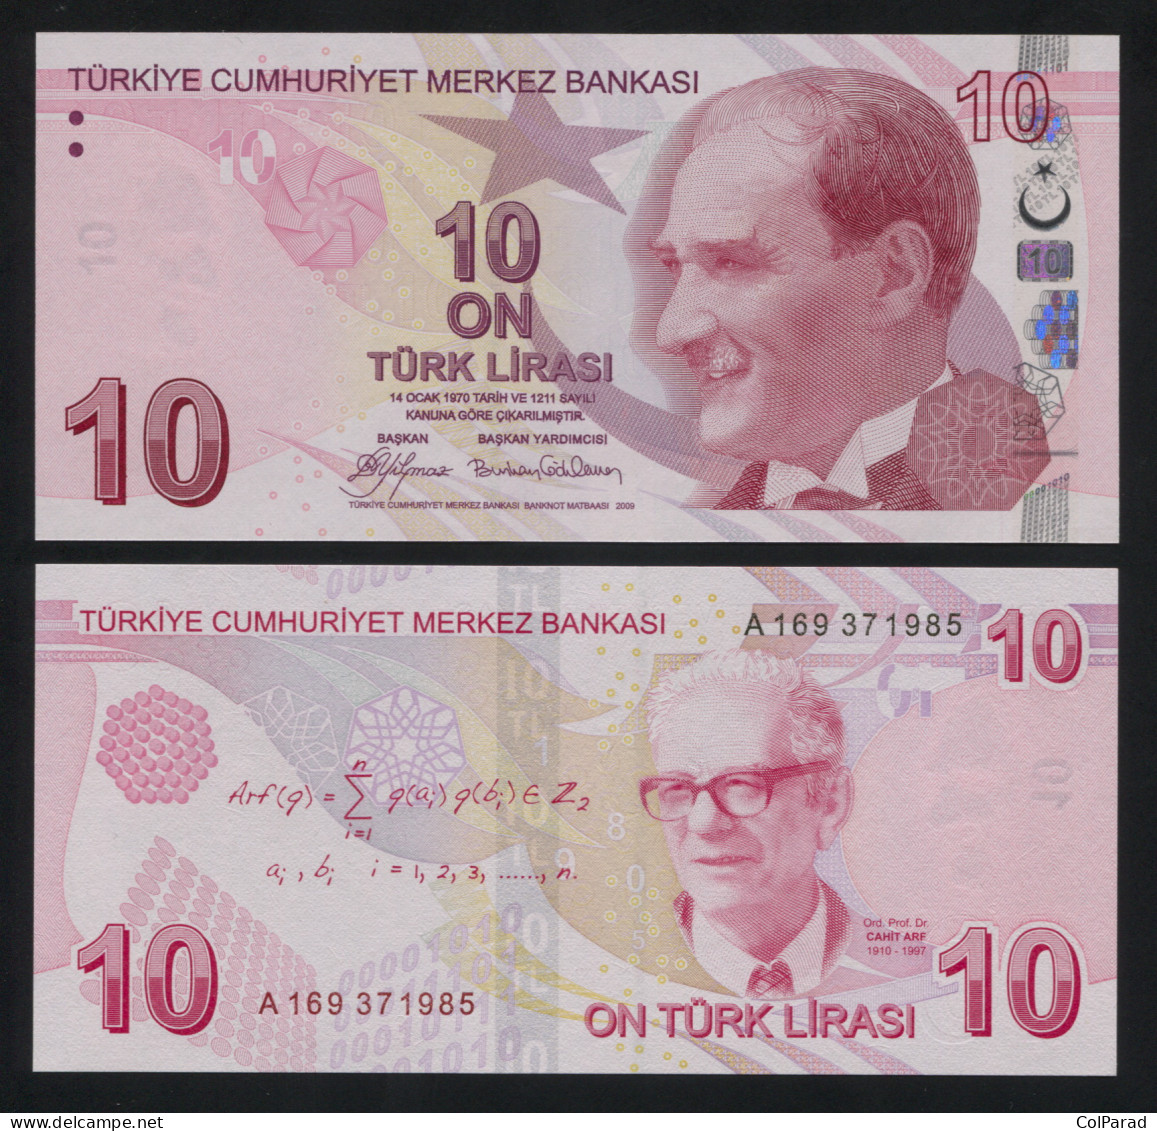 TURKEY 10 TÜRK LIRASI - 2009 - Paper Unc - P.223a Banknote - Turquie